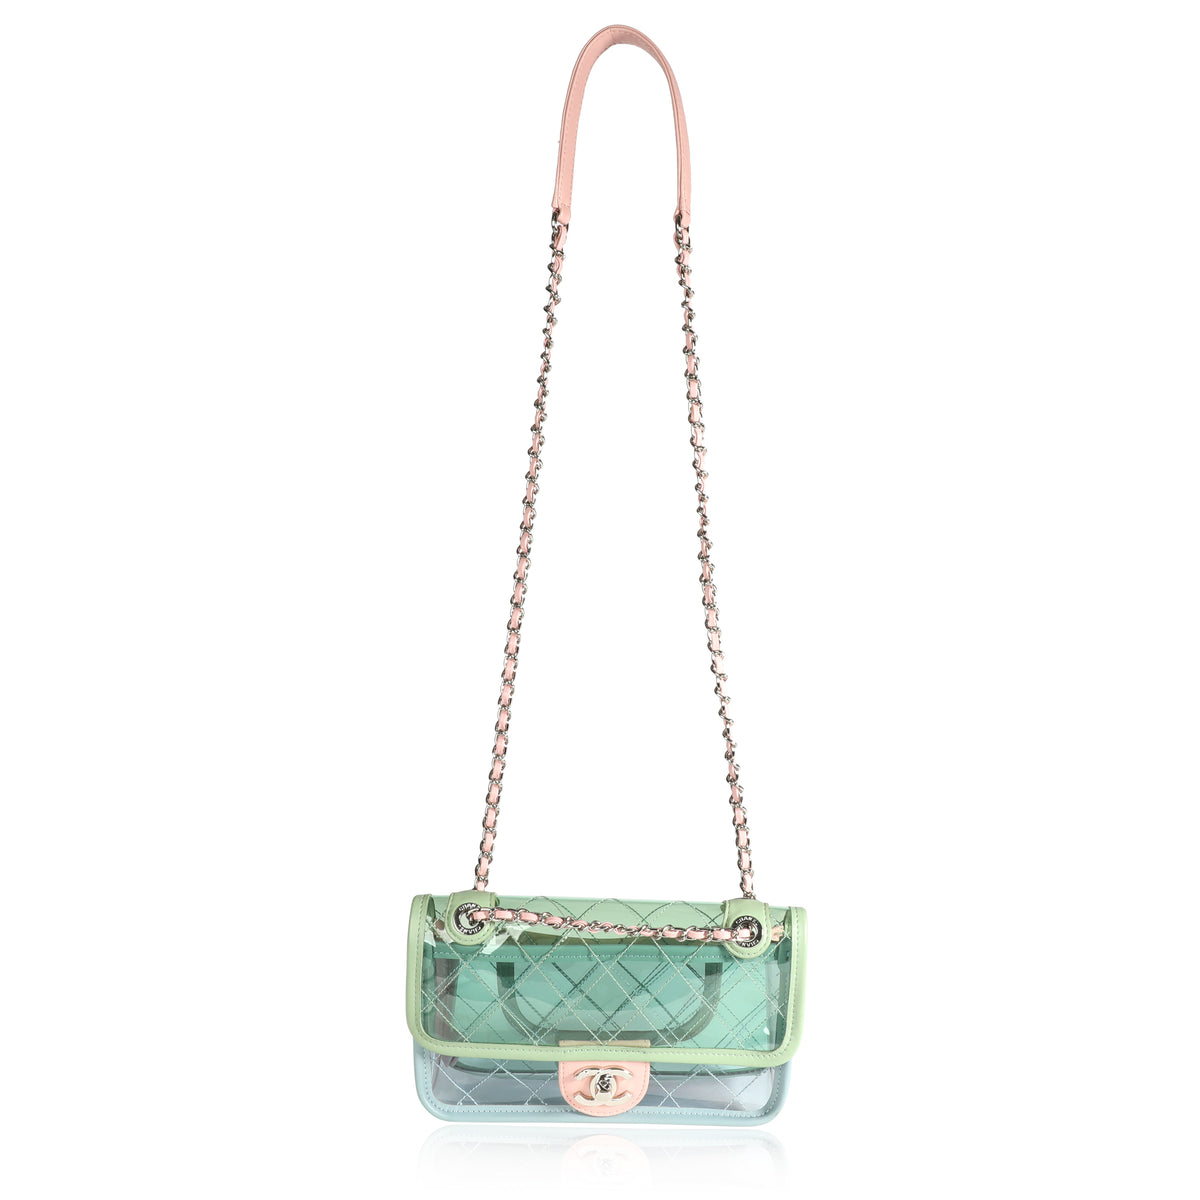 Chanel Black Calfskin Small Flap Bag for sale online